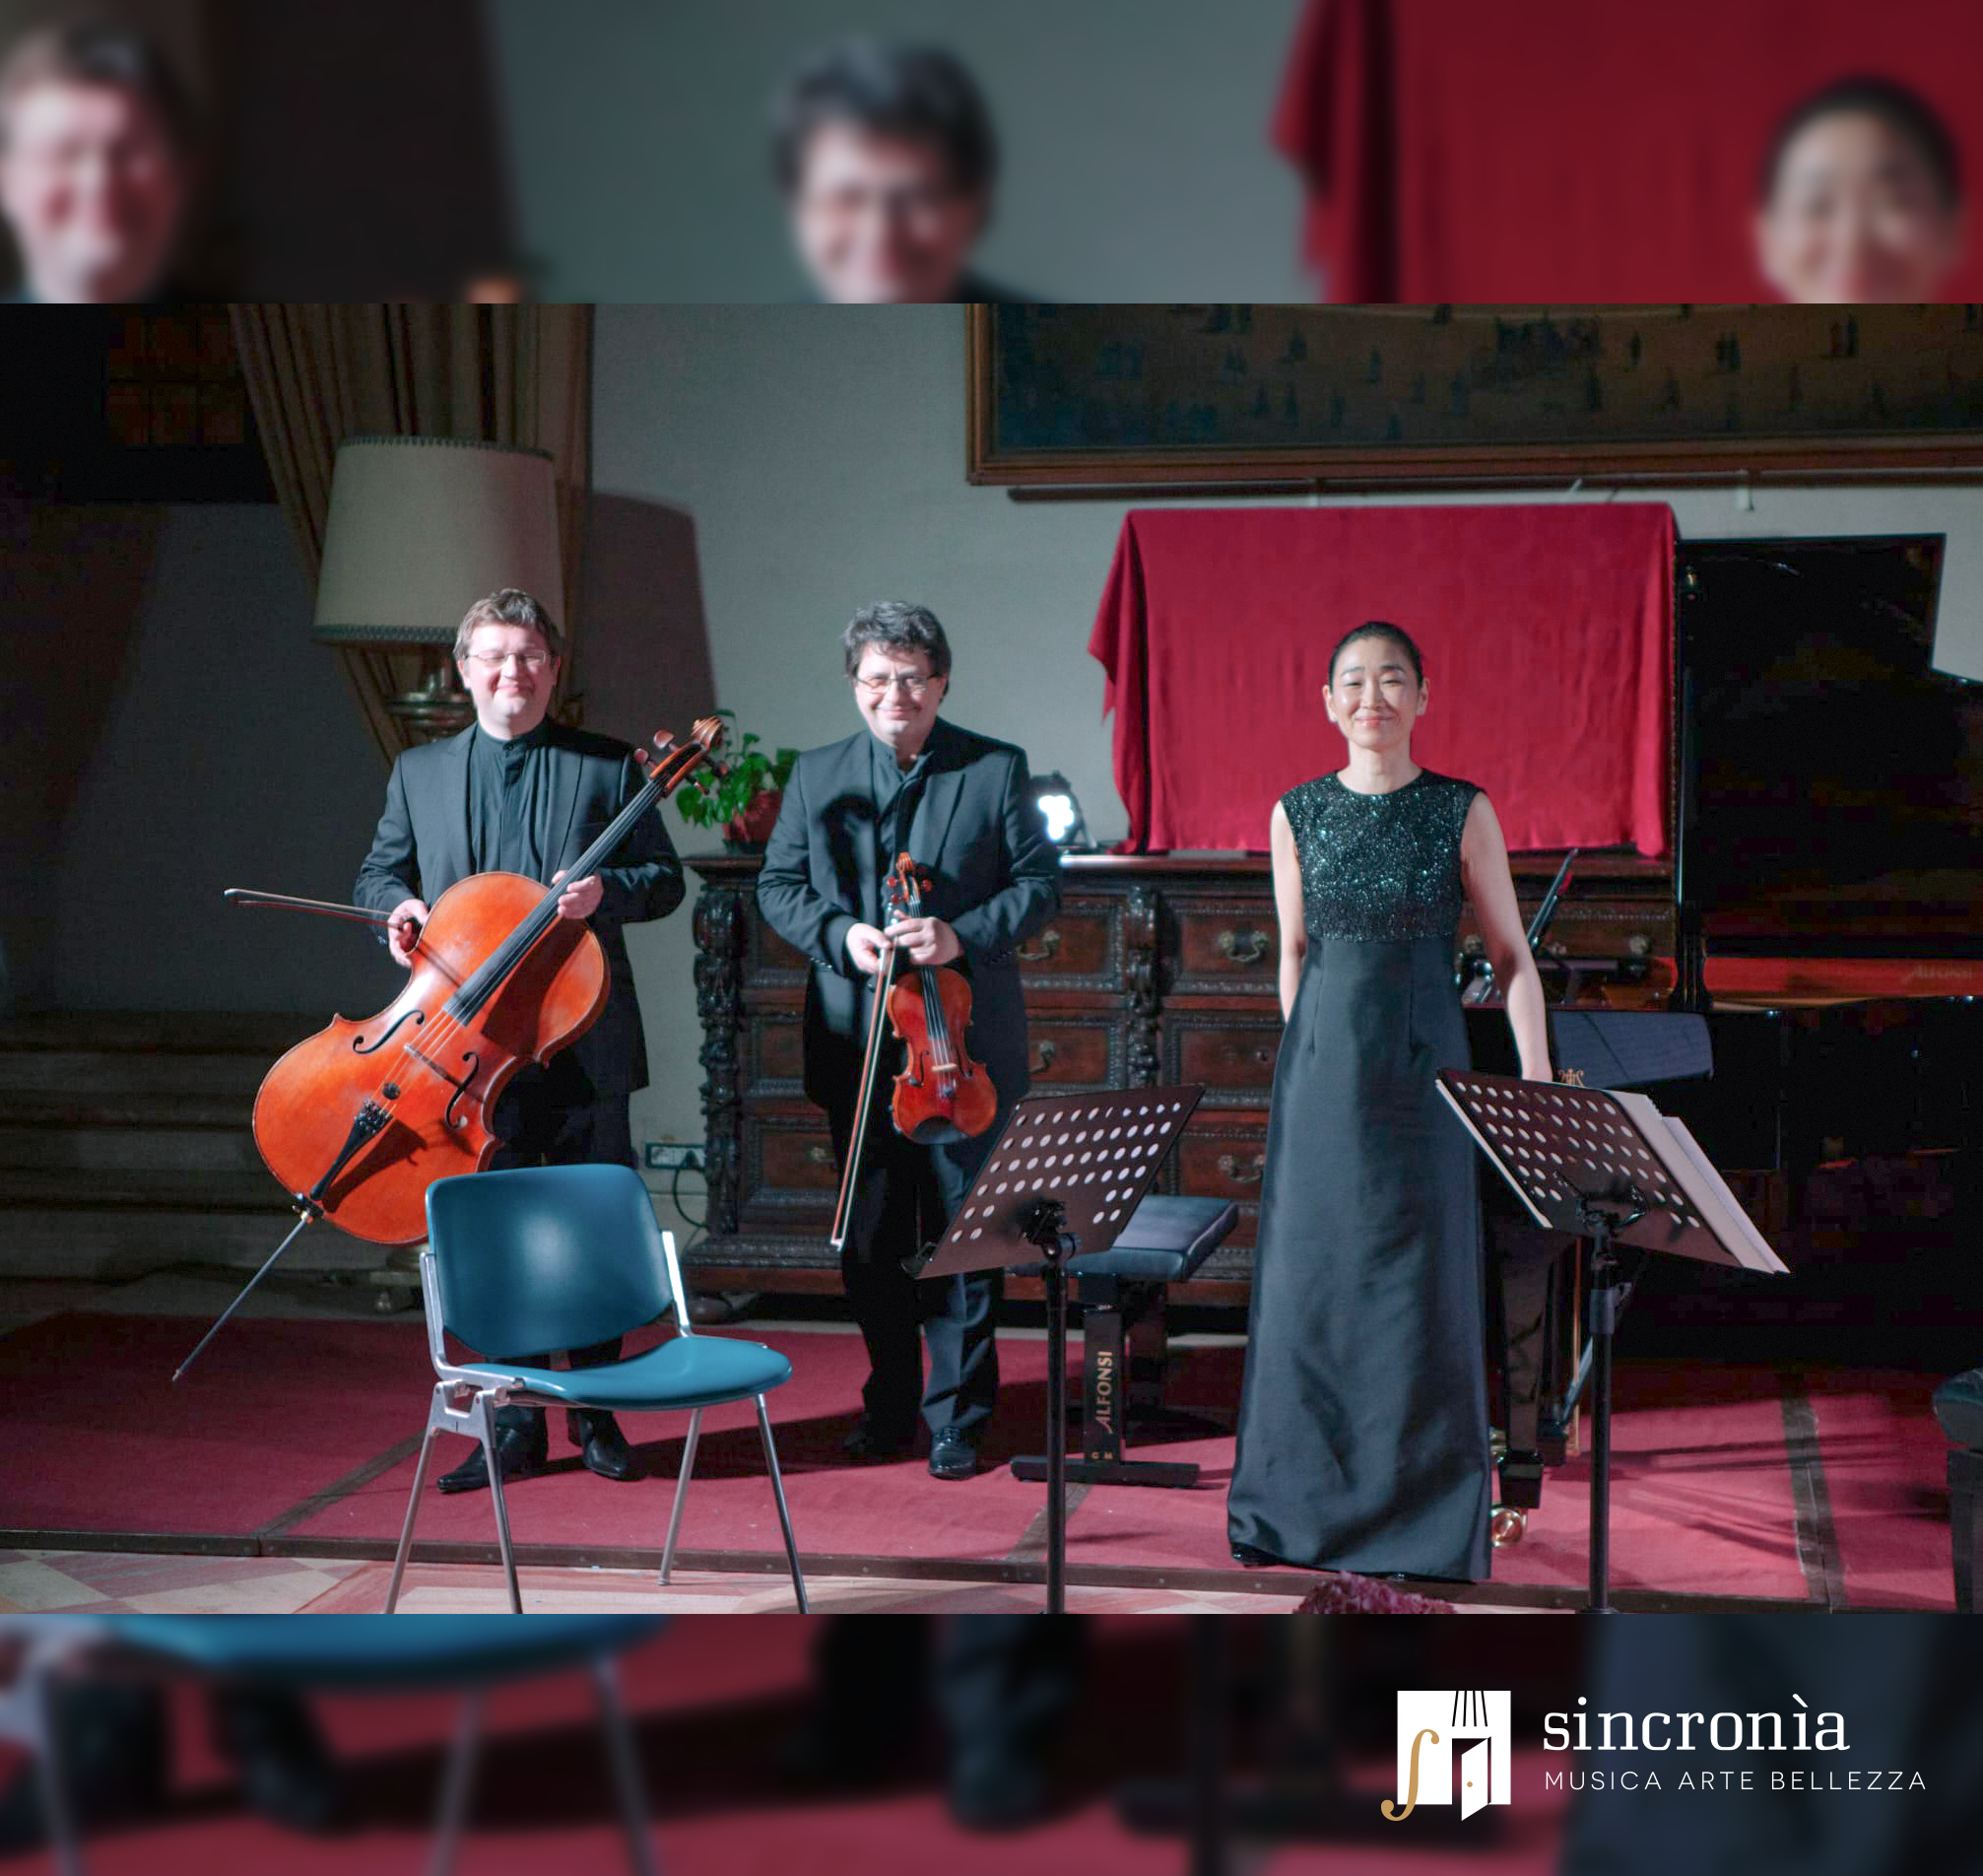 Rassegna Concertistica Sincronìa 2021/22 – AOIDE Trio